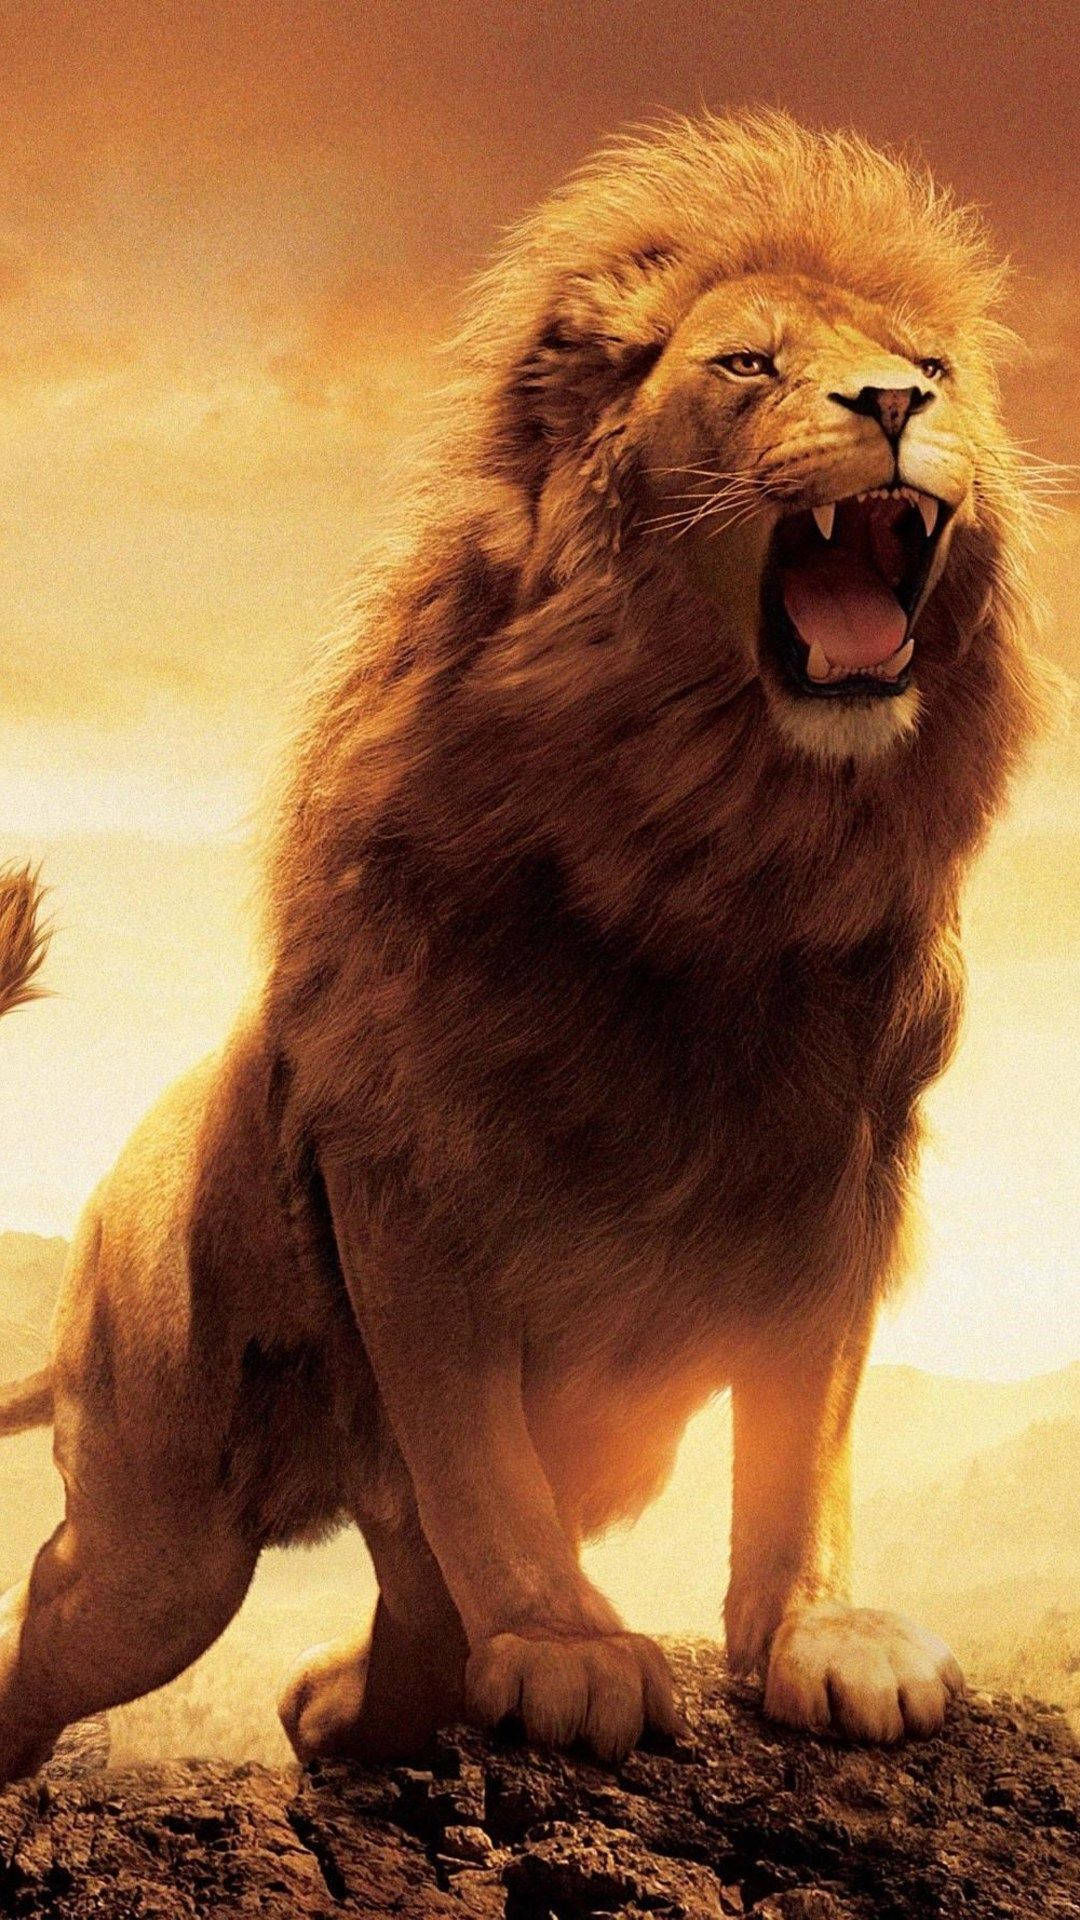 Roaring Wild Lion Iphone